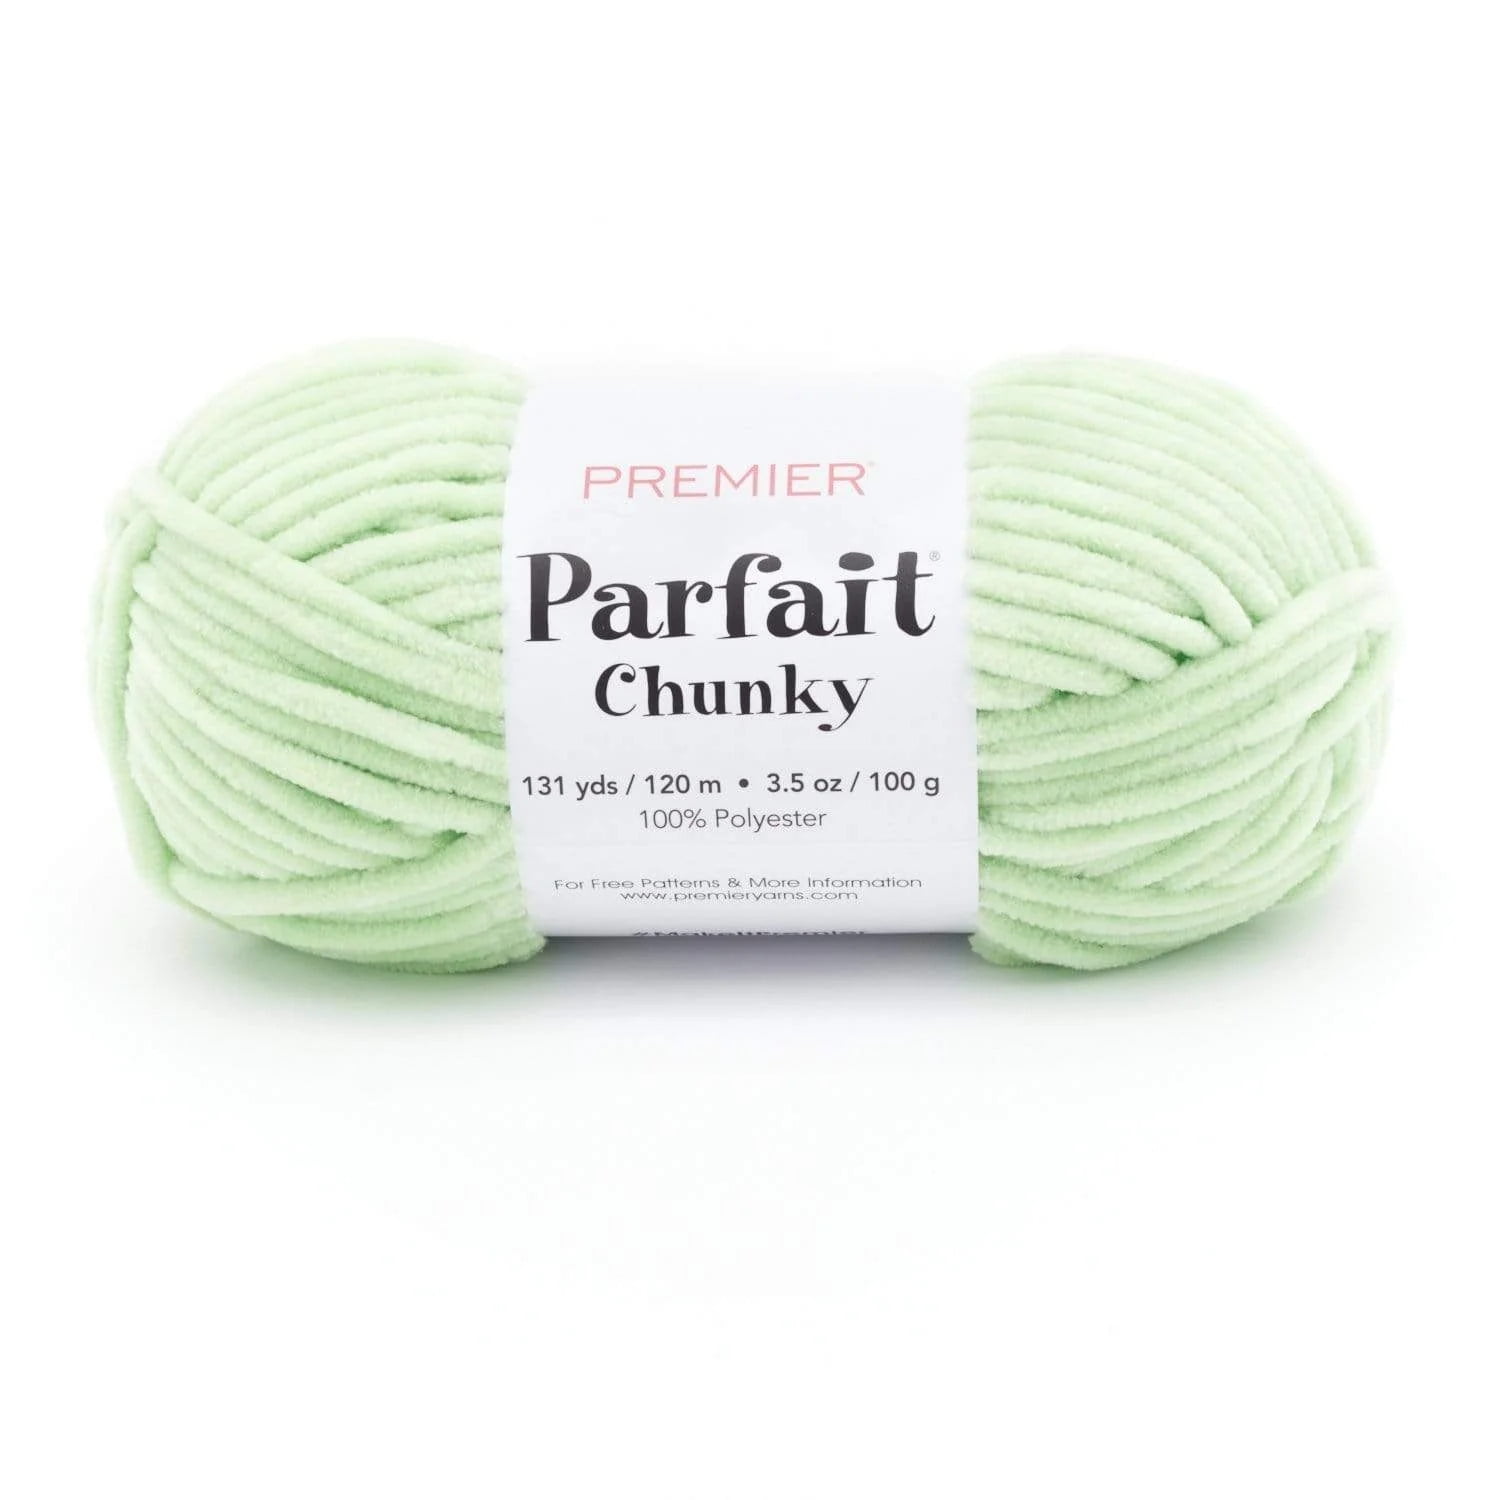 Premier Parfait Chunky Yarn-Rain, 1 - Fry's Food Stores